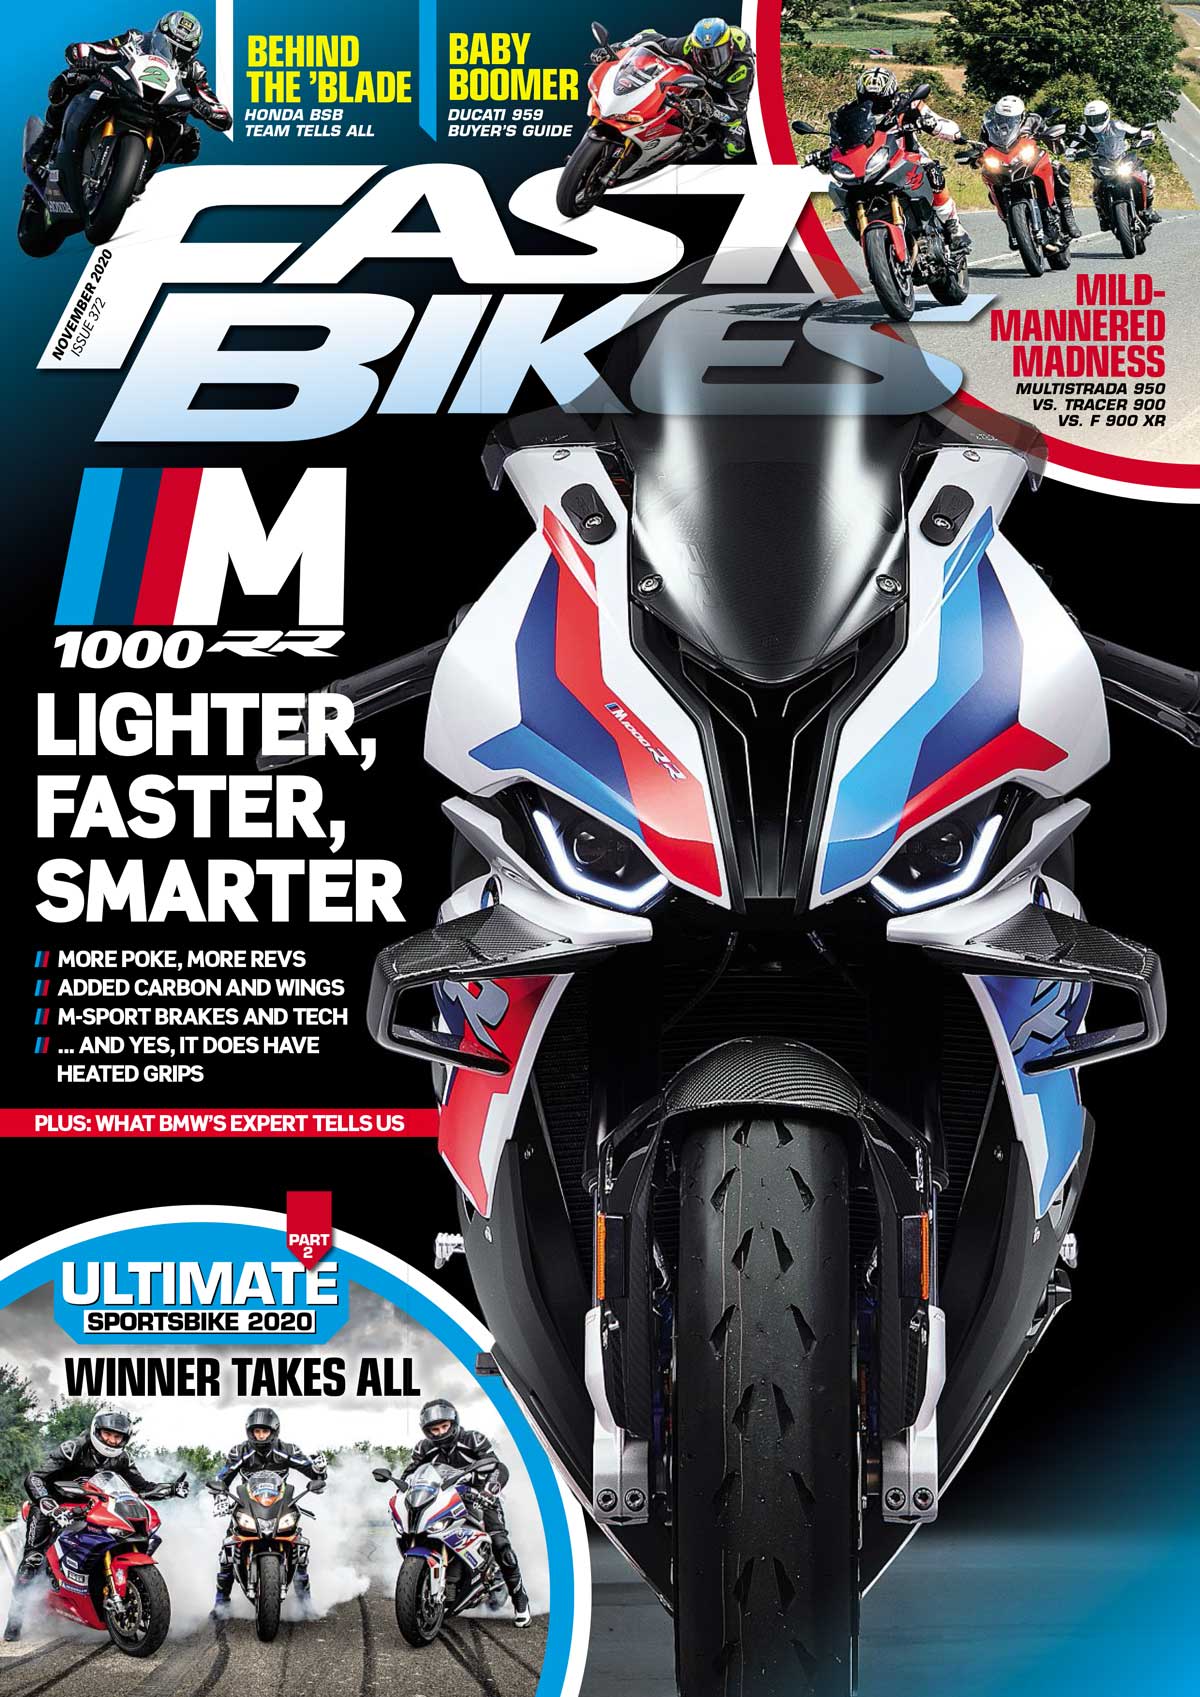 PREVIEW: November issue of Fast Bikes magazine